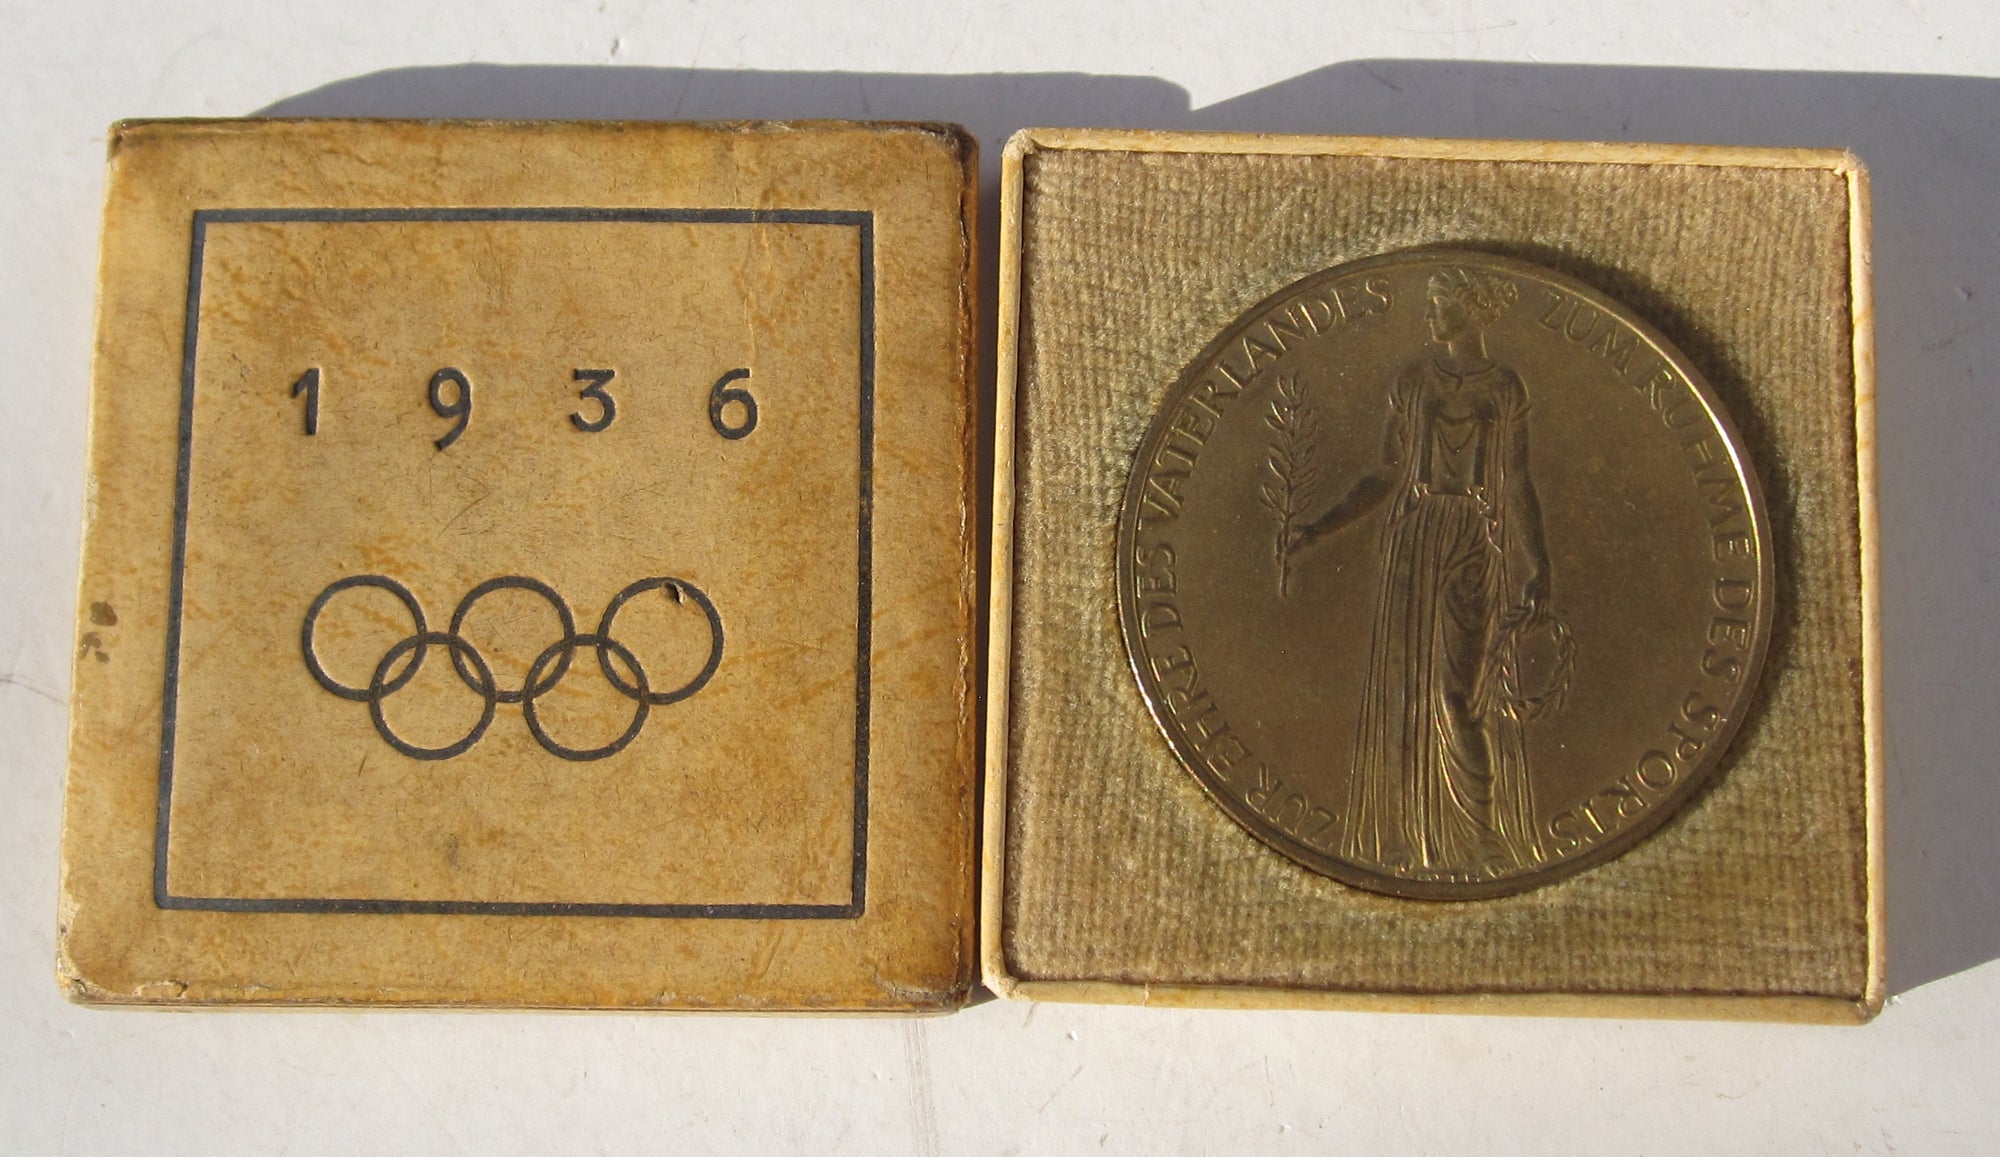 Medaille Olympische Spiele 1936 in Schachtel Weimar in Thüringen